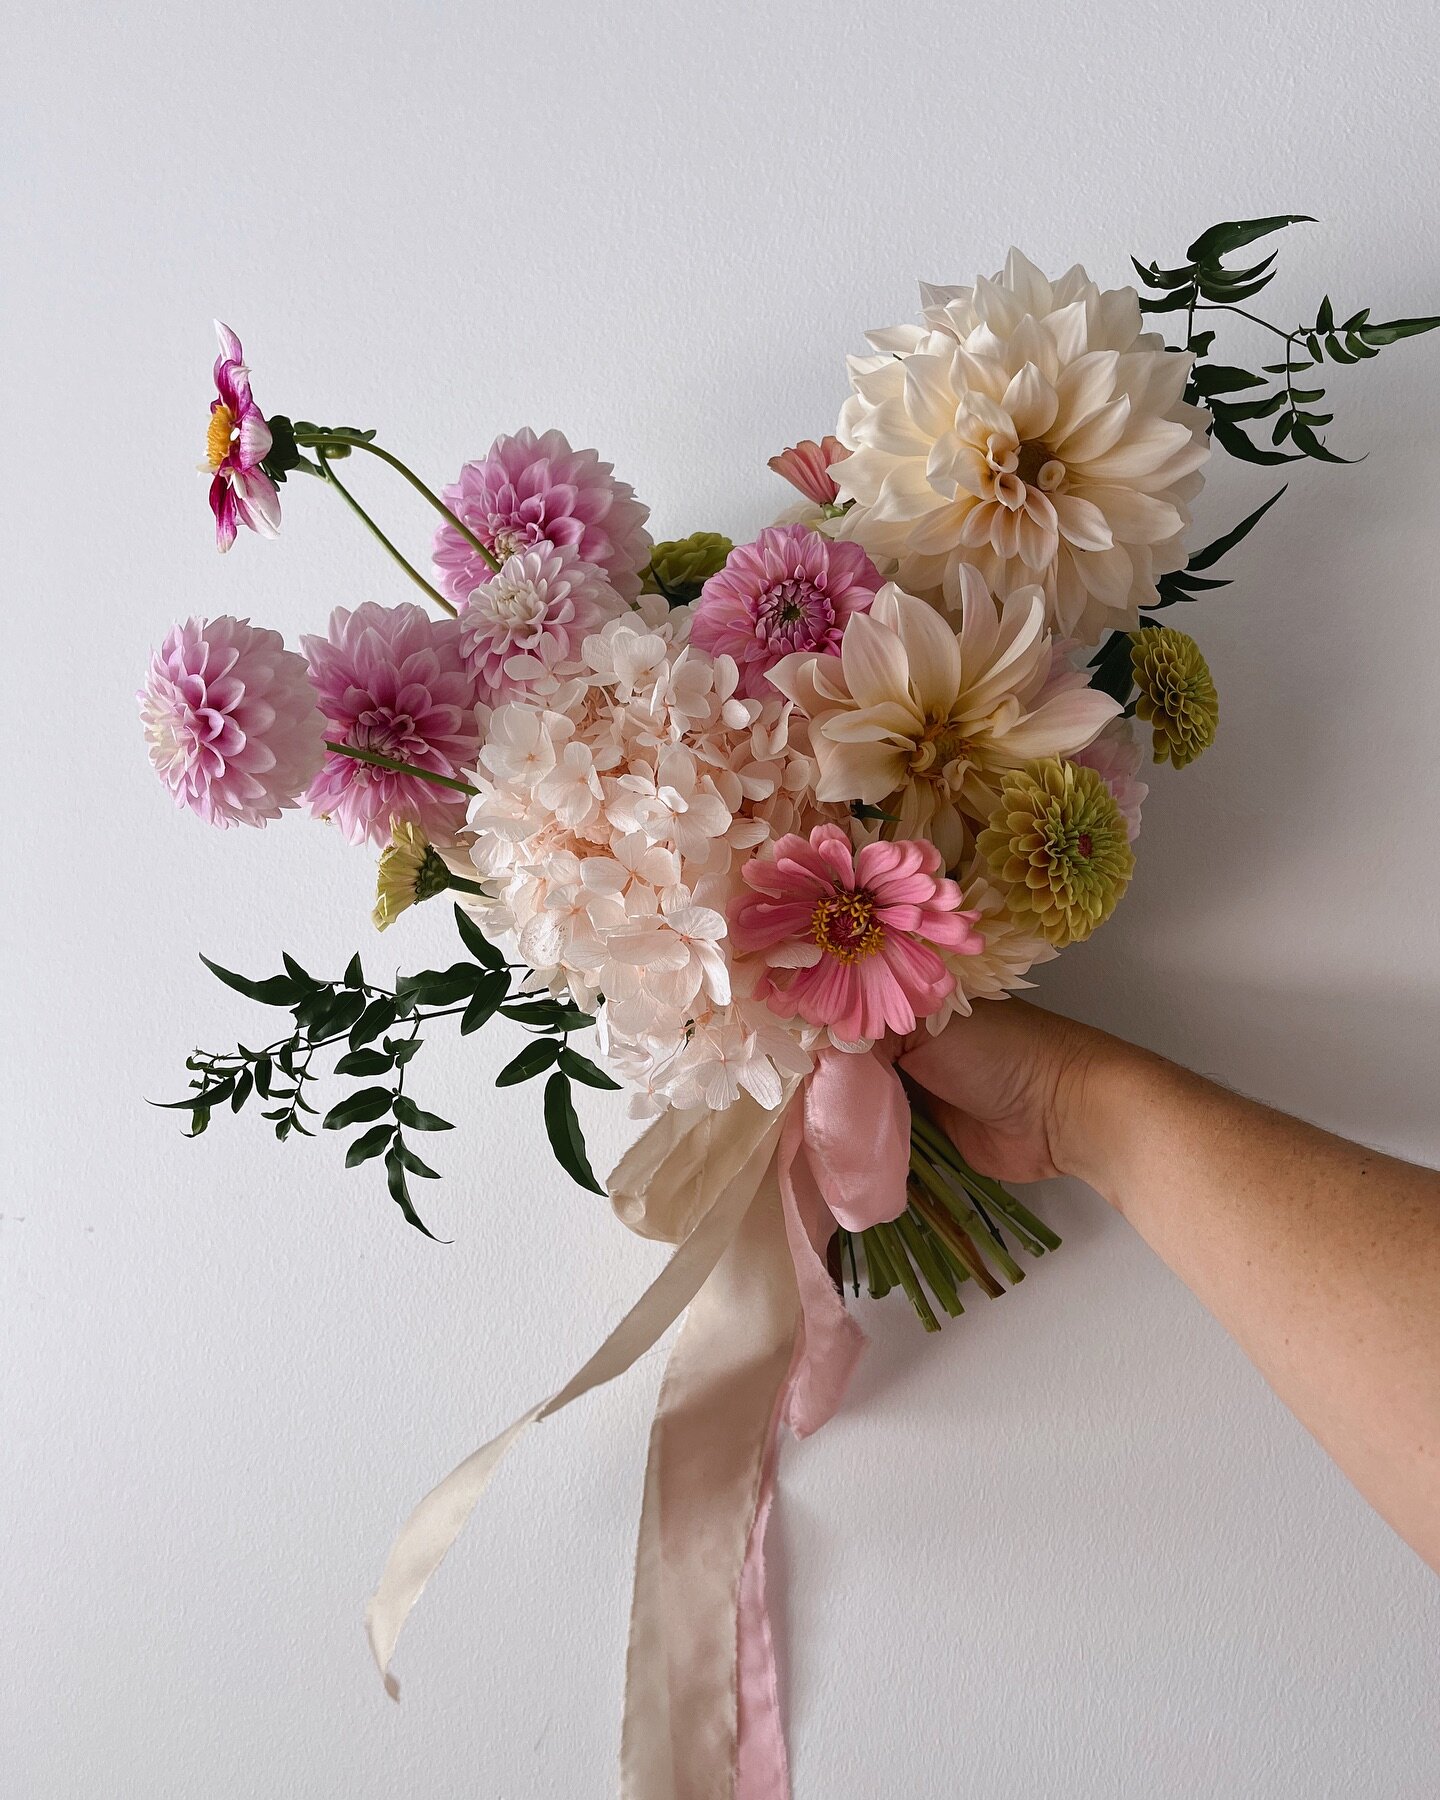 Bridal blooms - Garden florals with a touch of magic ✨
.
.
.
.
.
.
#goldcoastflorist #goldcoastwedding #tamborinemountain #tamborineflorist #bridalbouquet #bridalflowers #mounttamborinewedding #mounttamborine #flowerworkshop #flowertutorial #howtomak